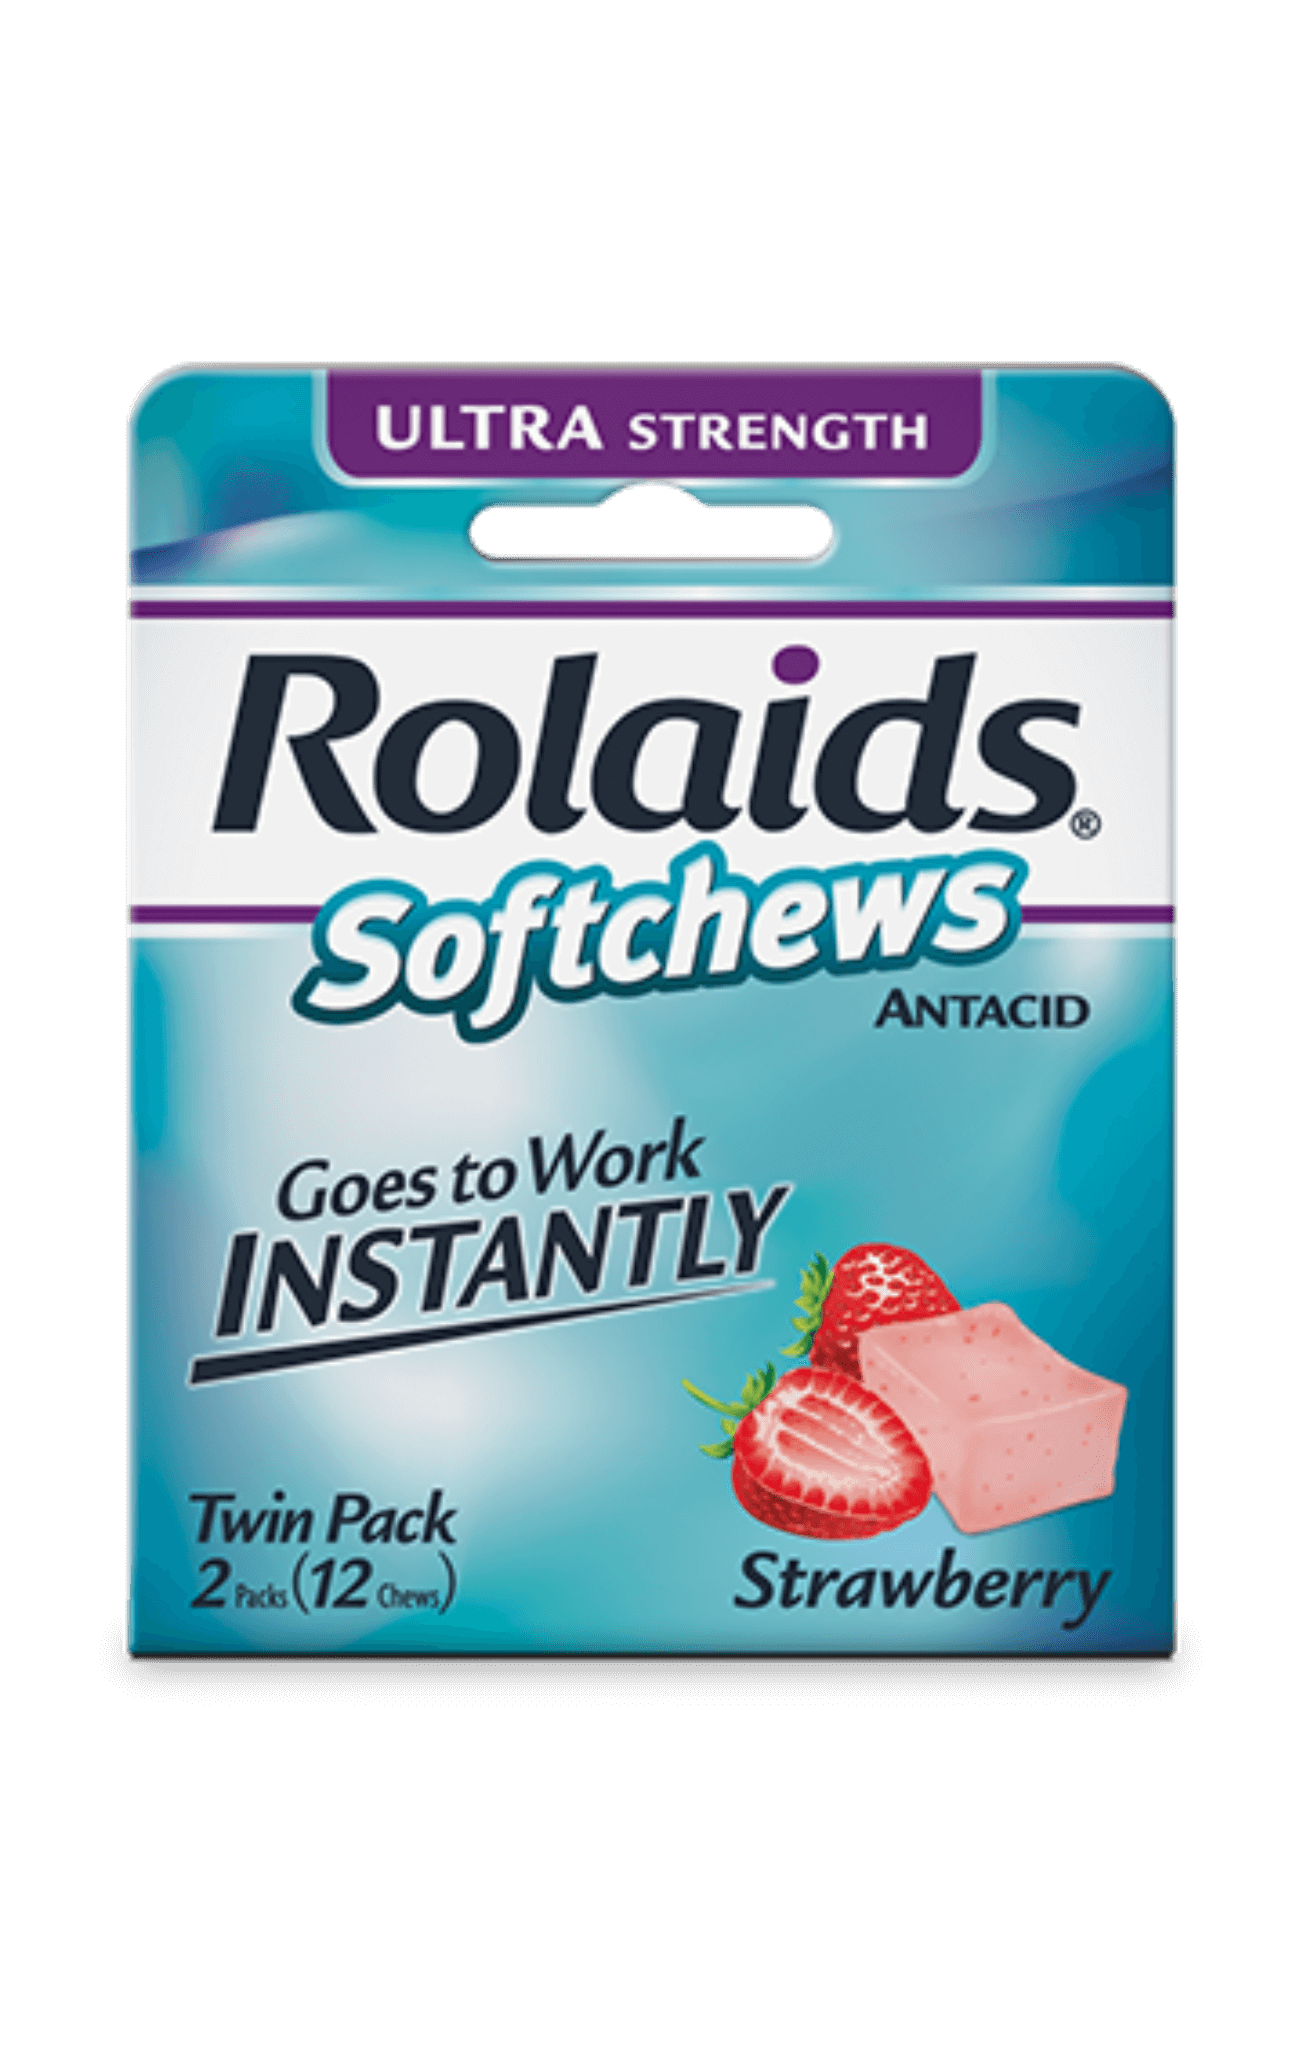 10313-Rolaids-Ultra-Softchews-Strawberry-2PackCrtn-359x570-F (1)